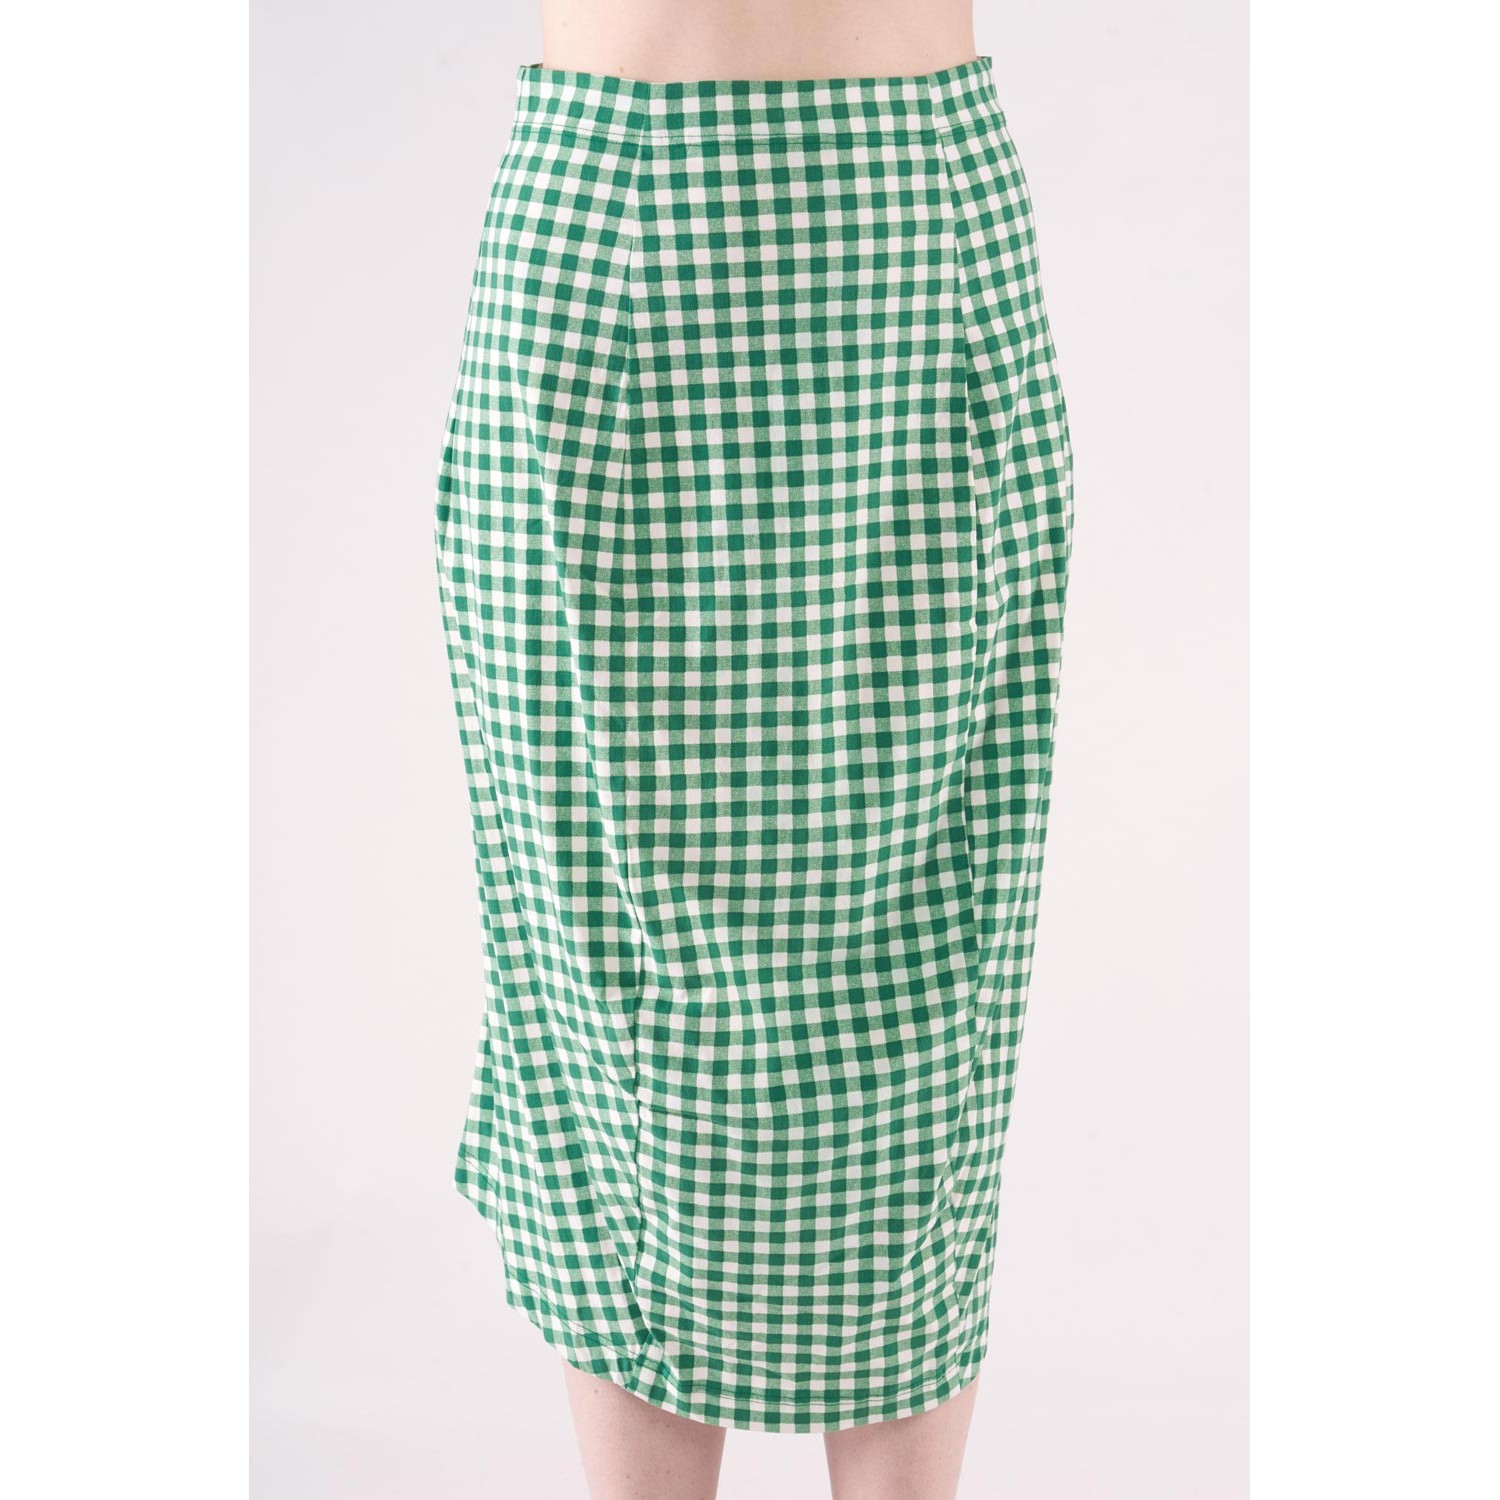 So What Tan Pleated Plaid Mini Skirt  Pleated mini skirt outfit Plaid  mini skirt Tennis skirt outfit